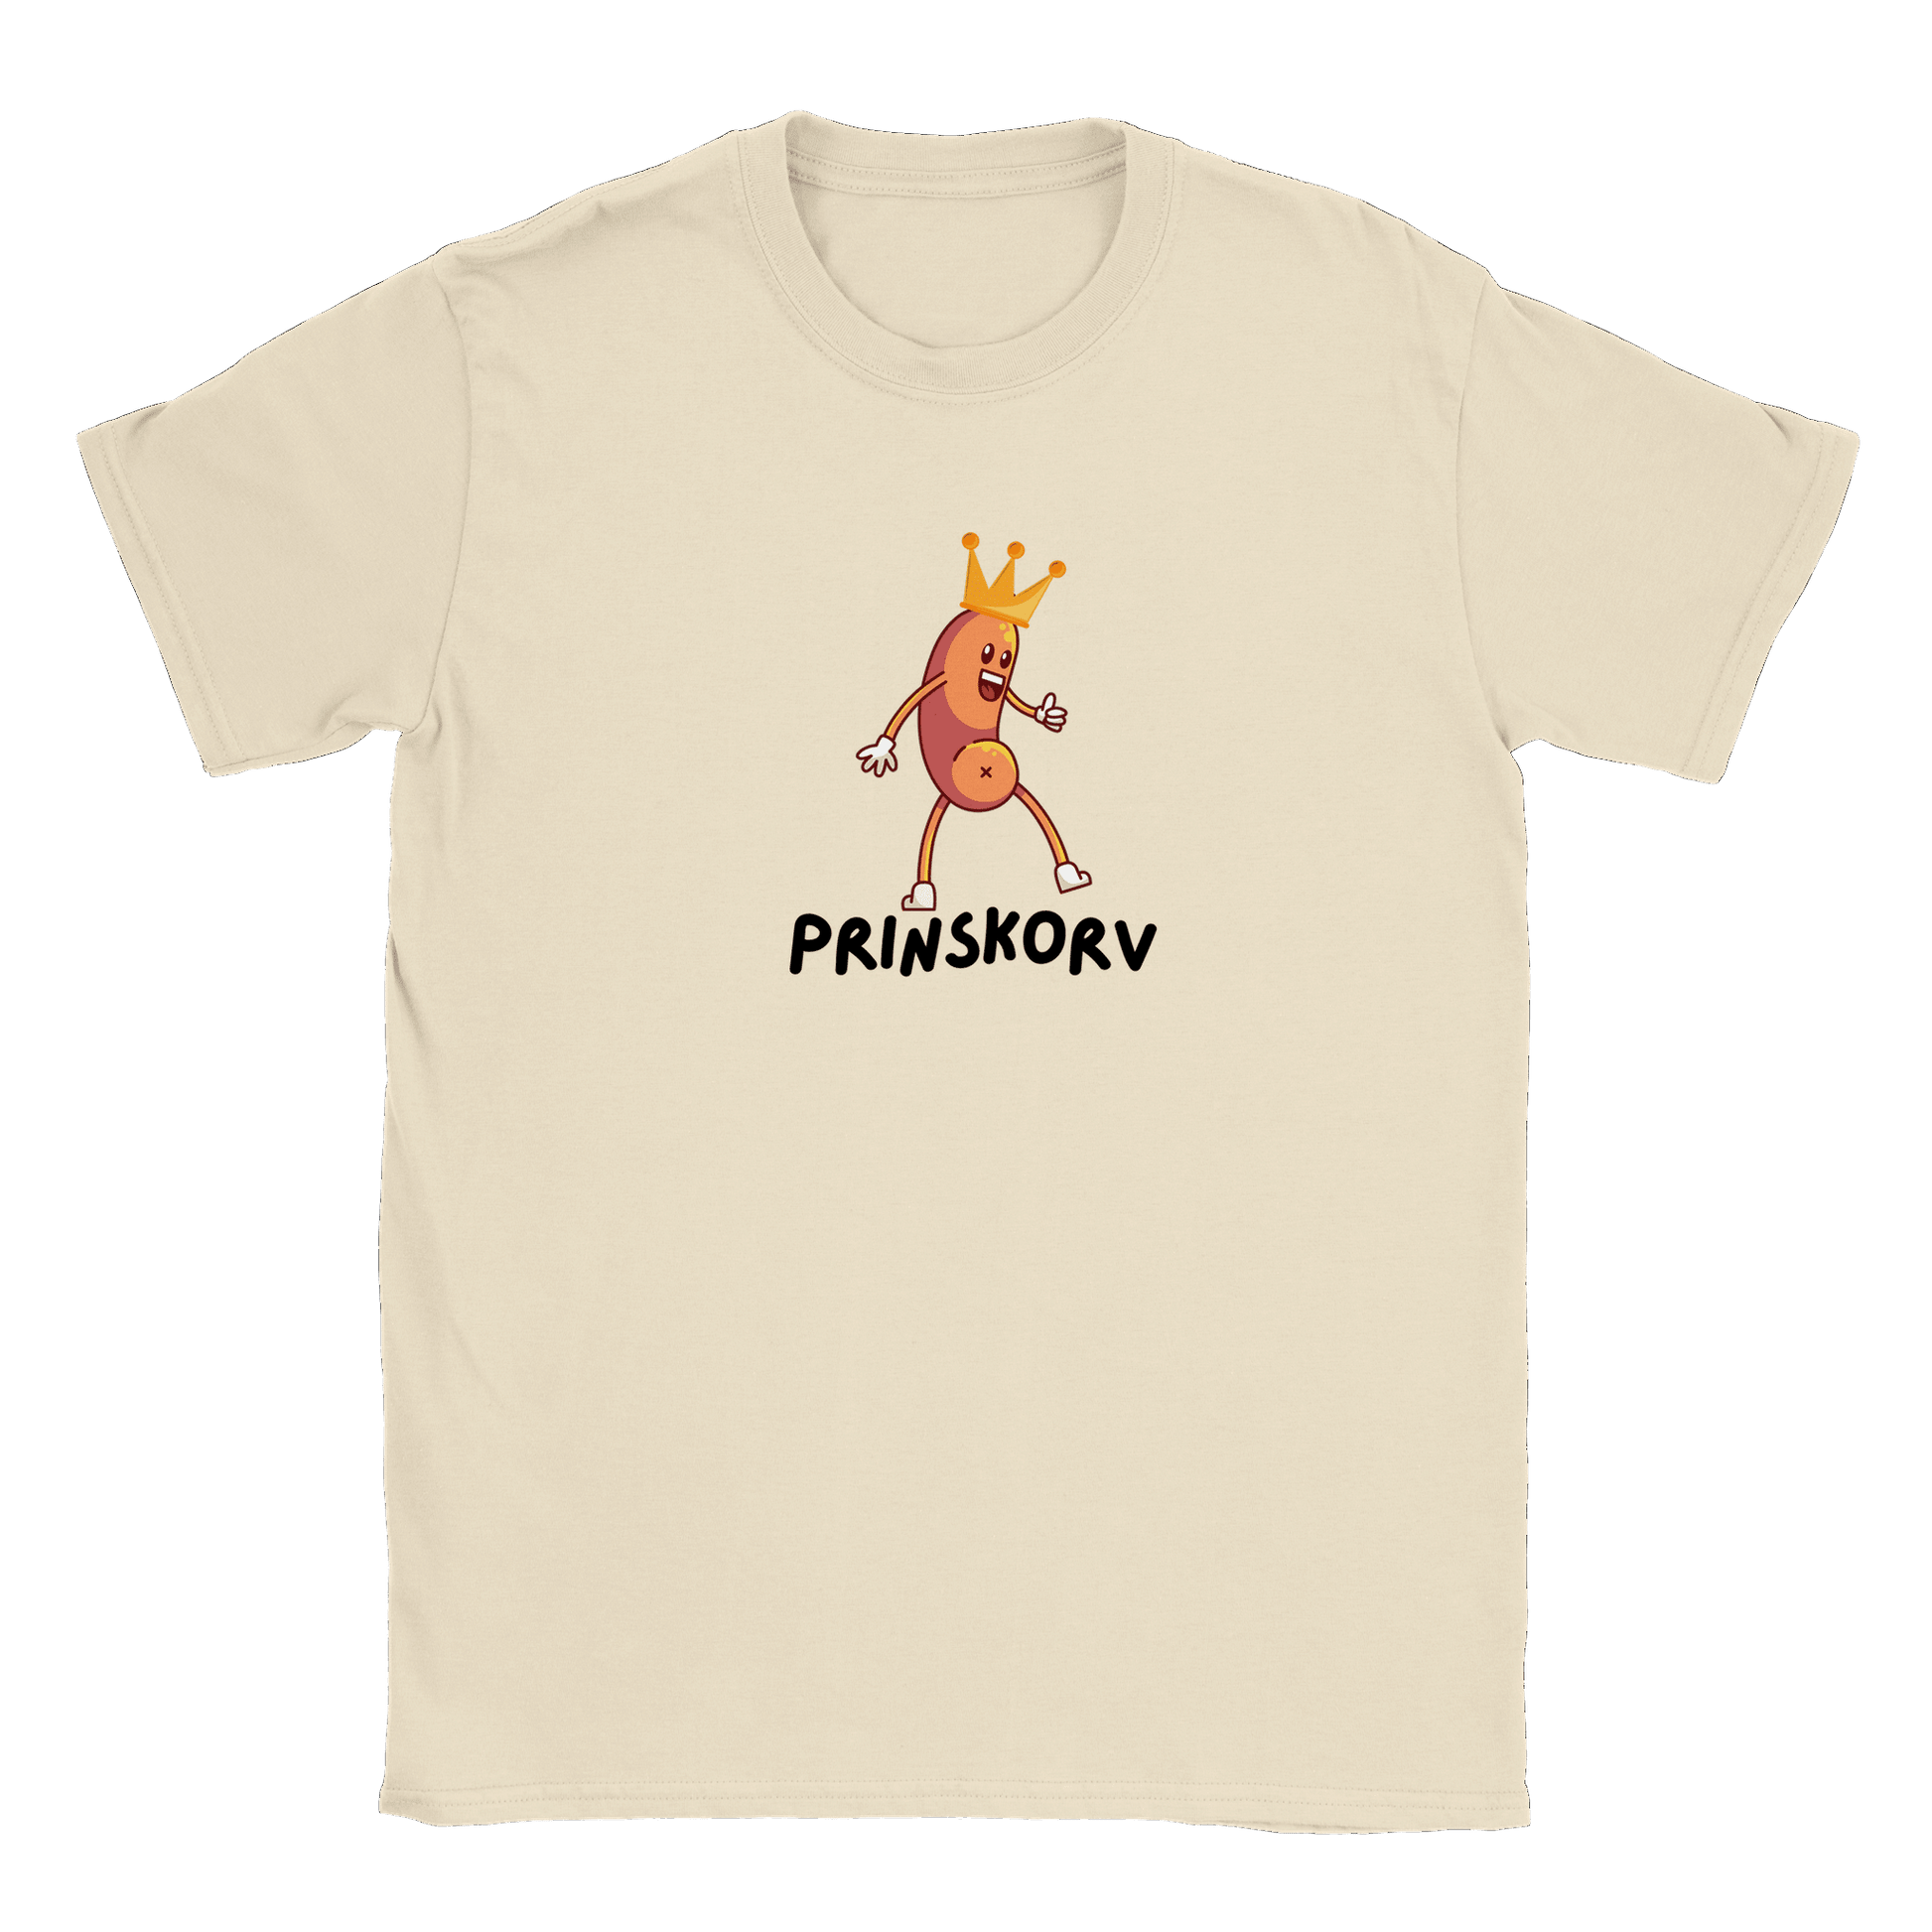 Prinskorv - T-shirt Natural